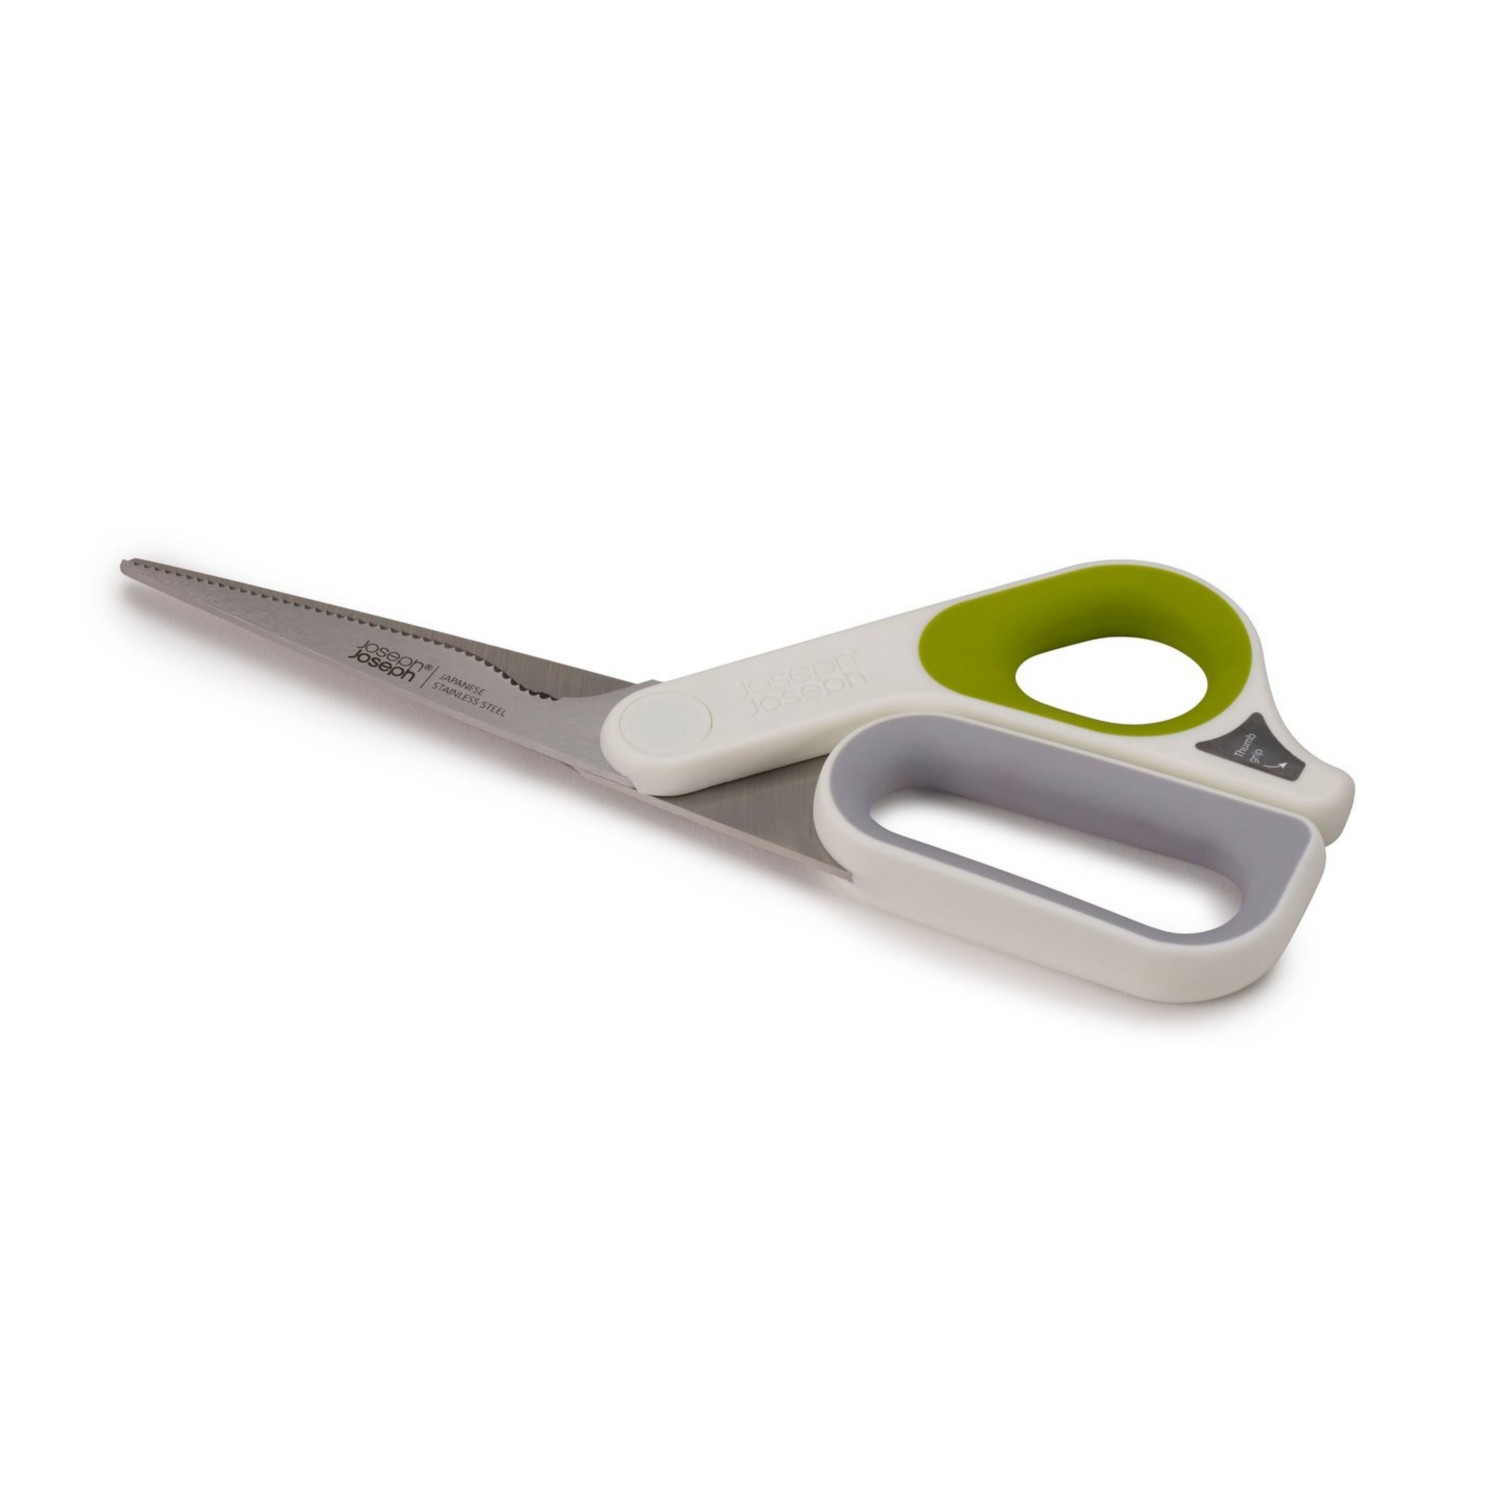 Kitchen scissors with integrated thumb grip Joseph Joseph